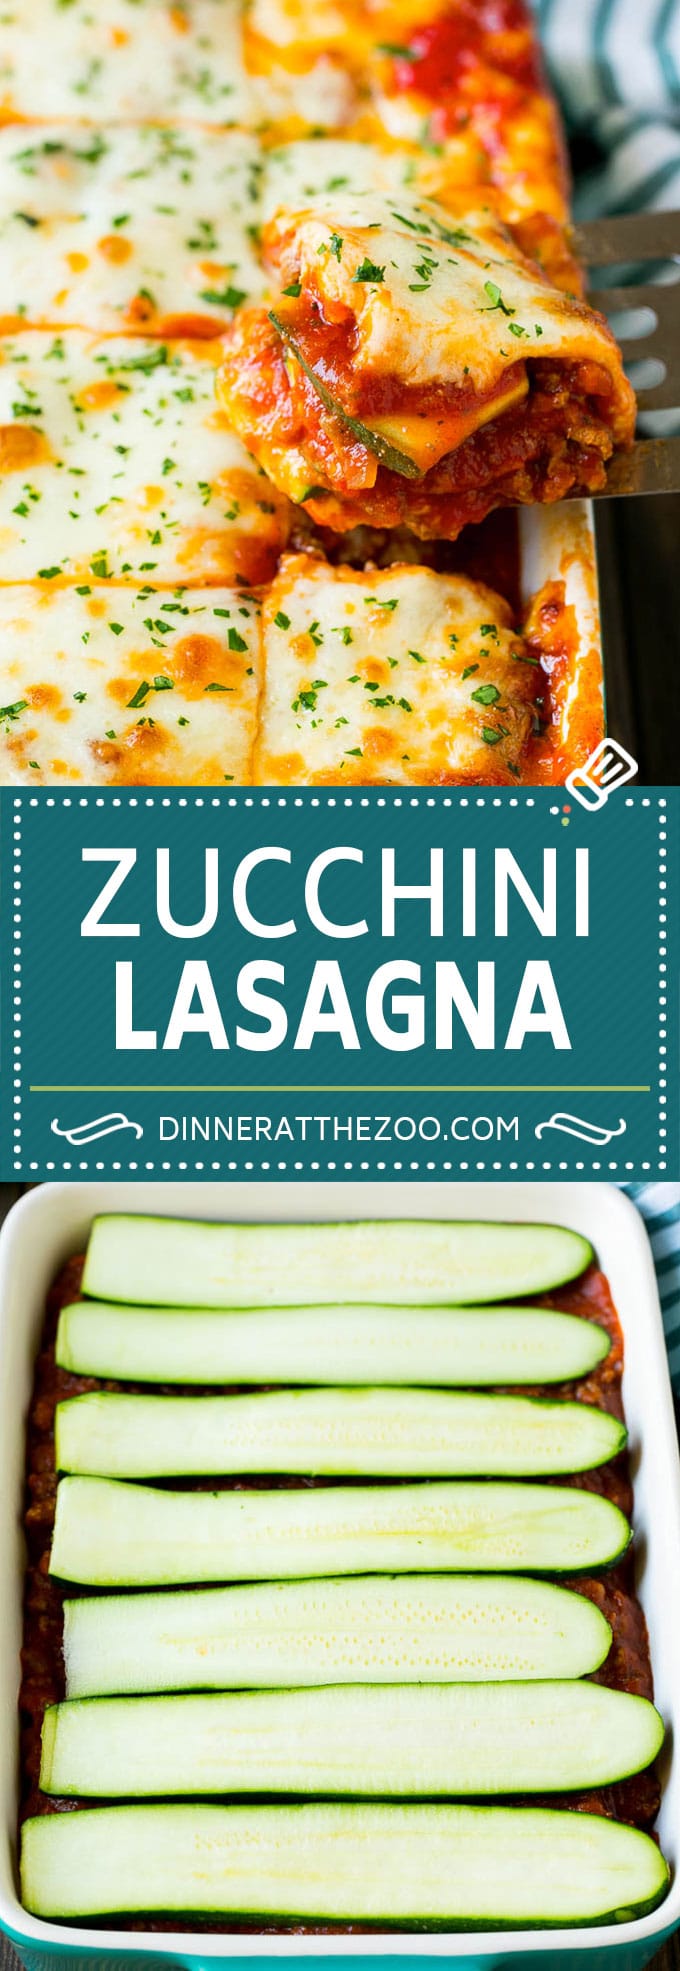 Zucchini Lasagna | Low Carb Lasagna #zucchini #lasagna #lowcarb #groundbeef #dinner #dinneratthezoo